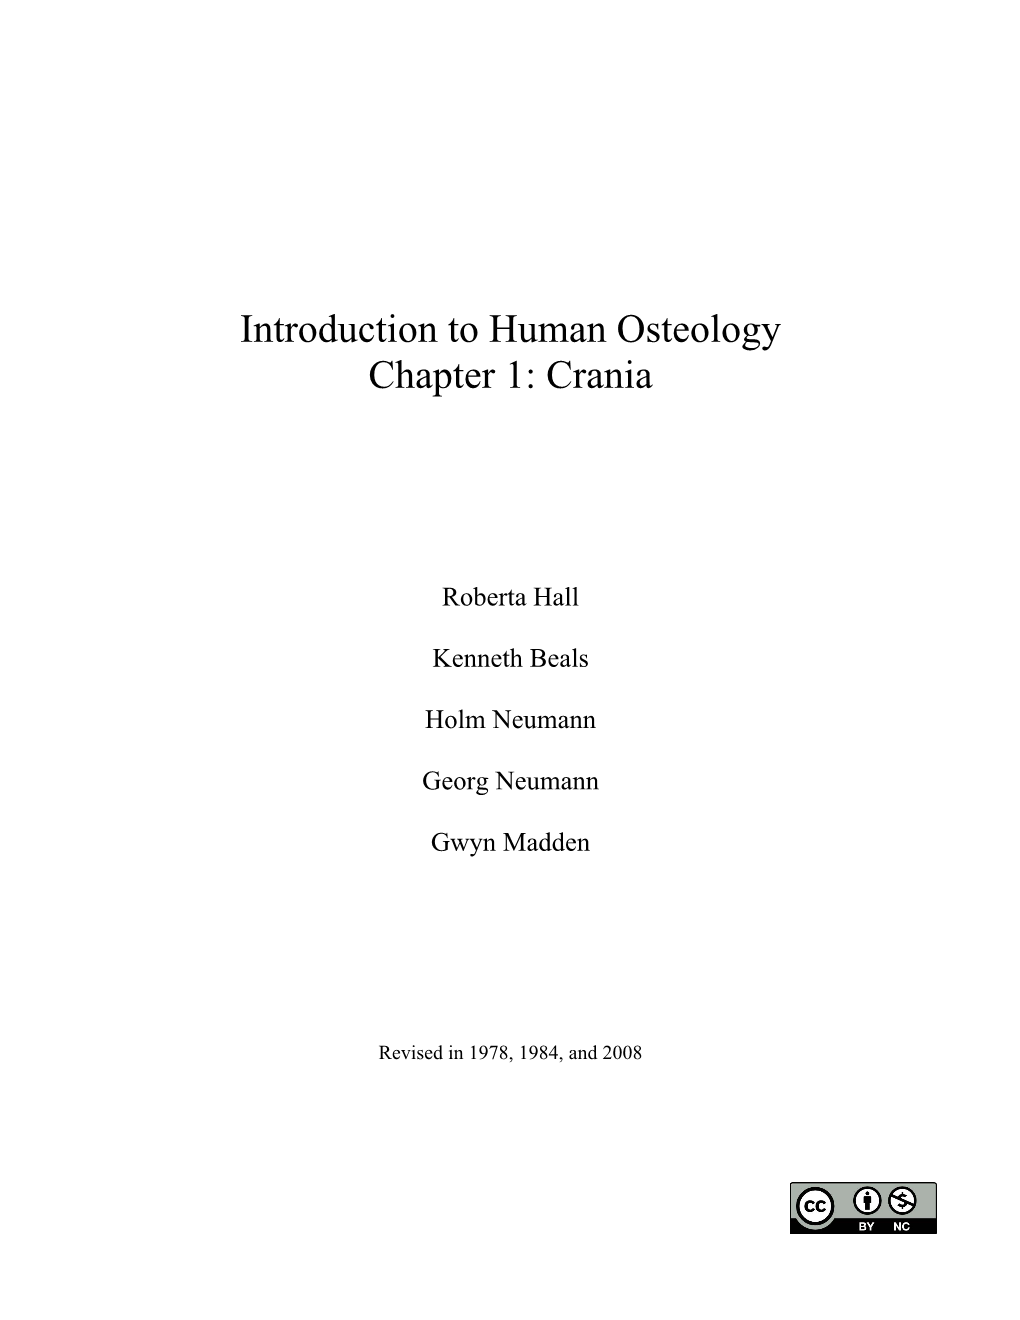 Introduction to Human Osteology Chapter 1: Crania